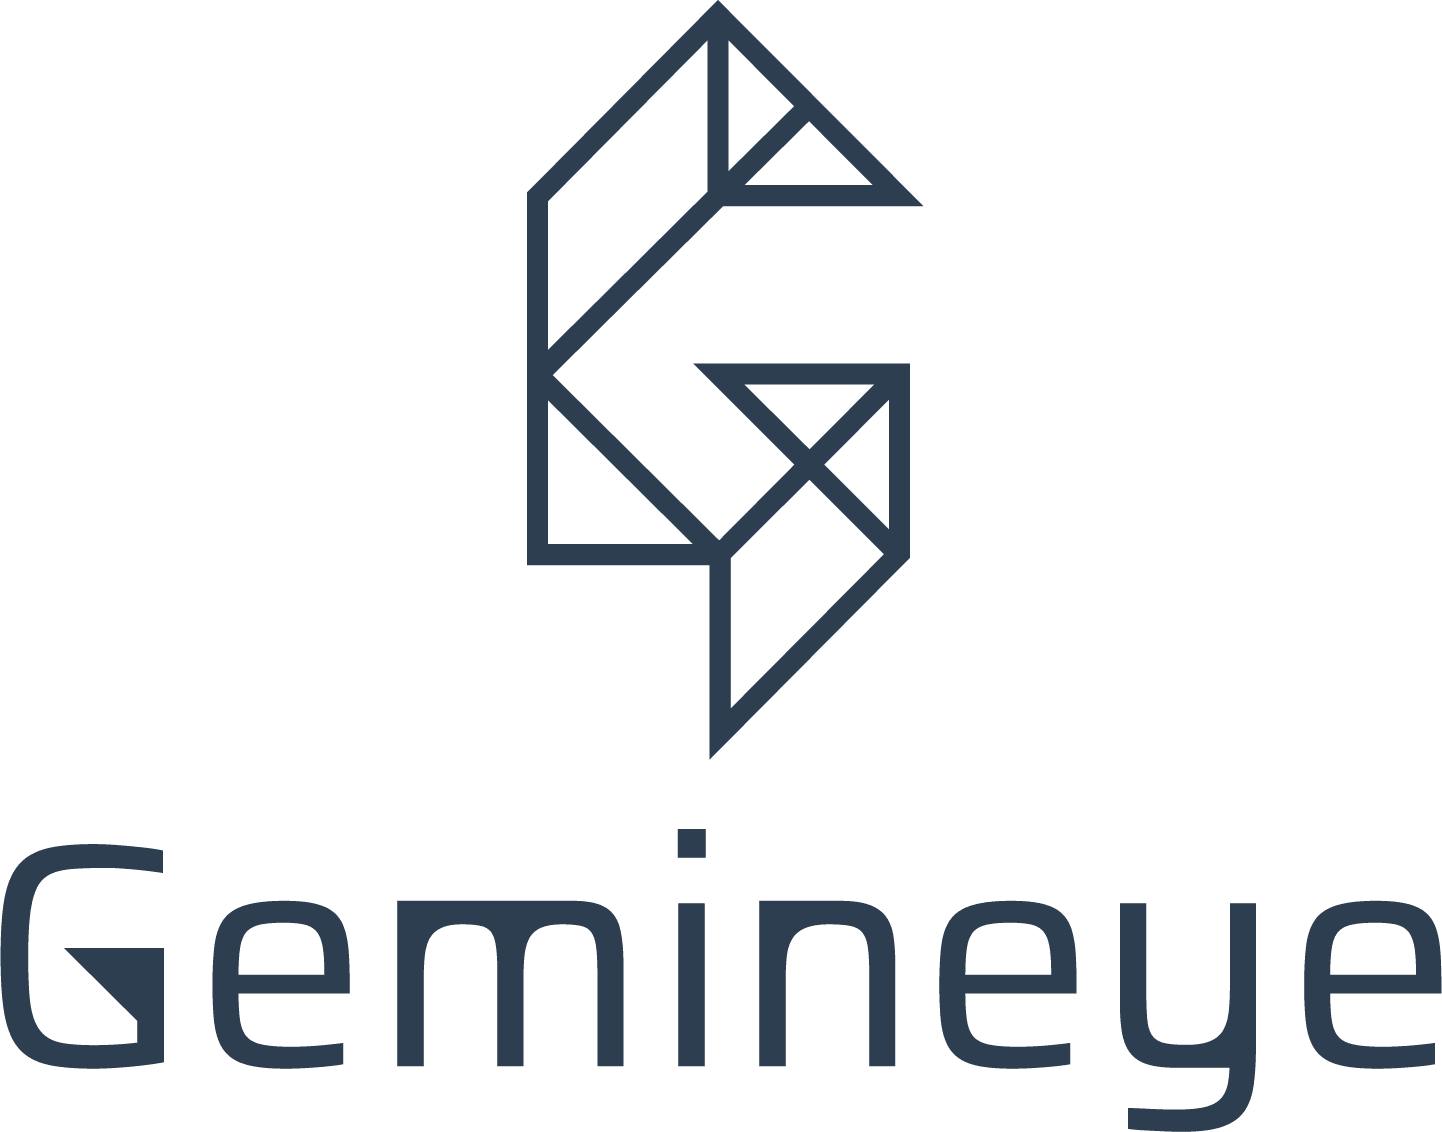 Gemineye logo in black outline.